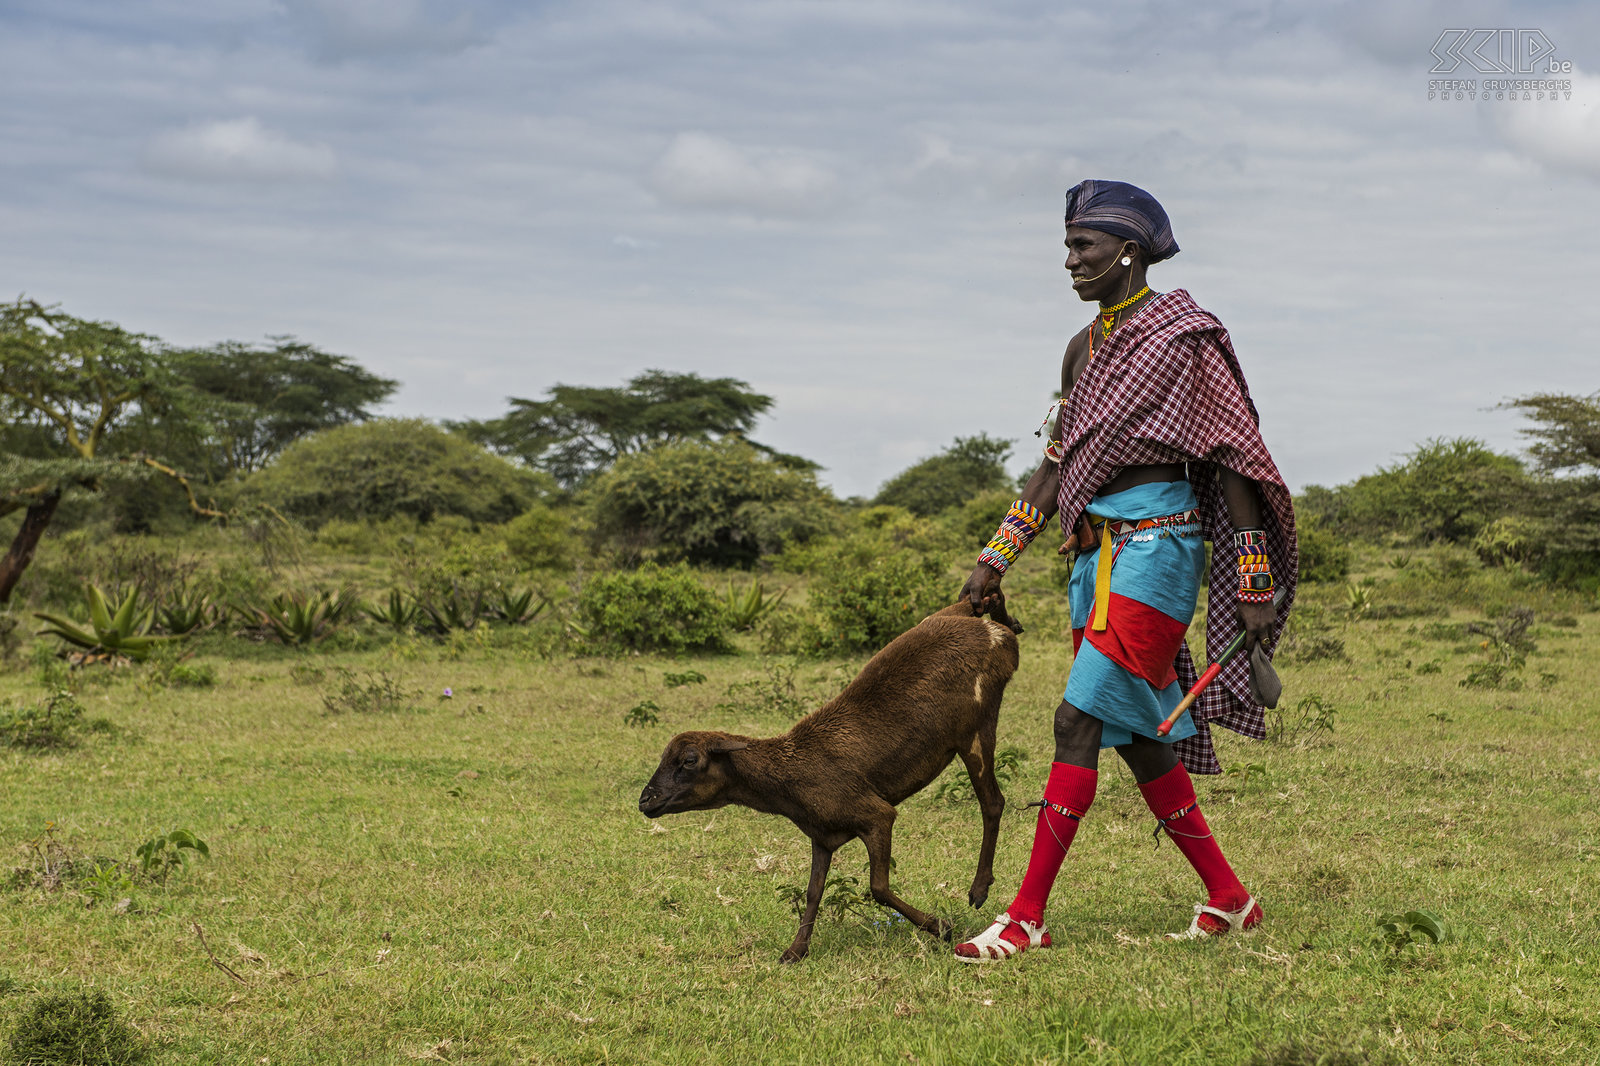 Kisima - Samburu moran with goat Samburu moran (warrior) with a goat at the livestock market of Kisima. Stefan Cruysberghs